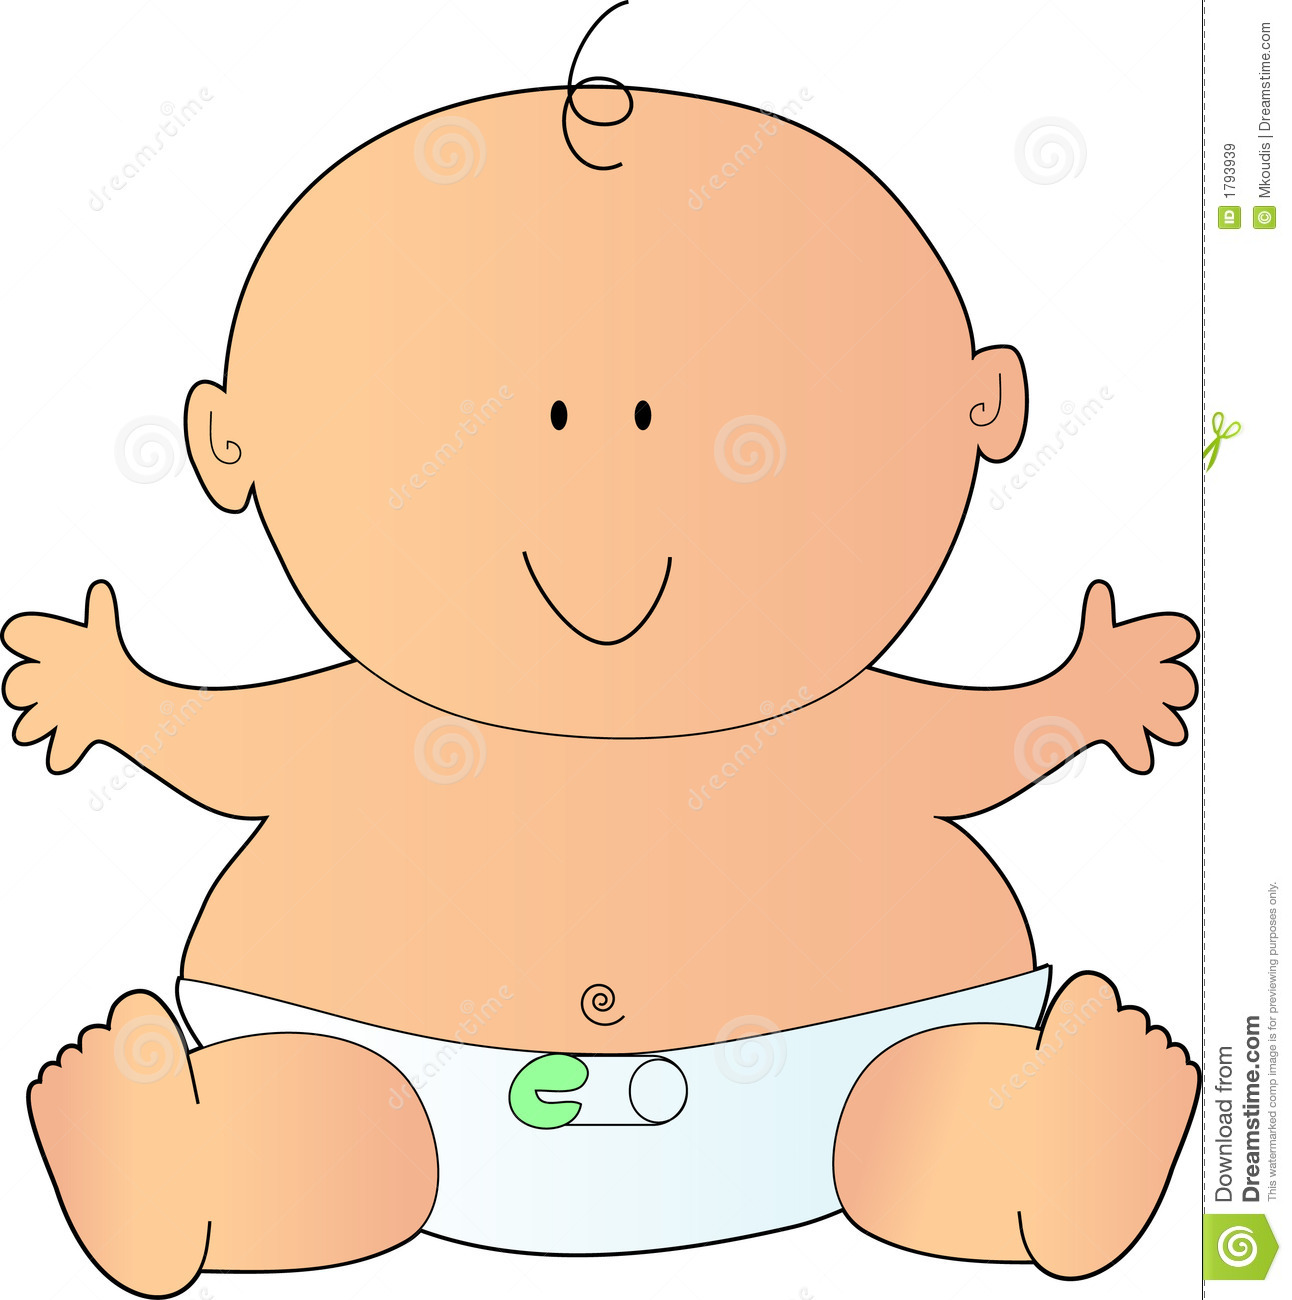 Baby in diaper clipart clipar